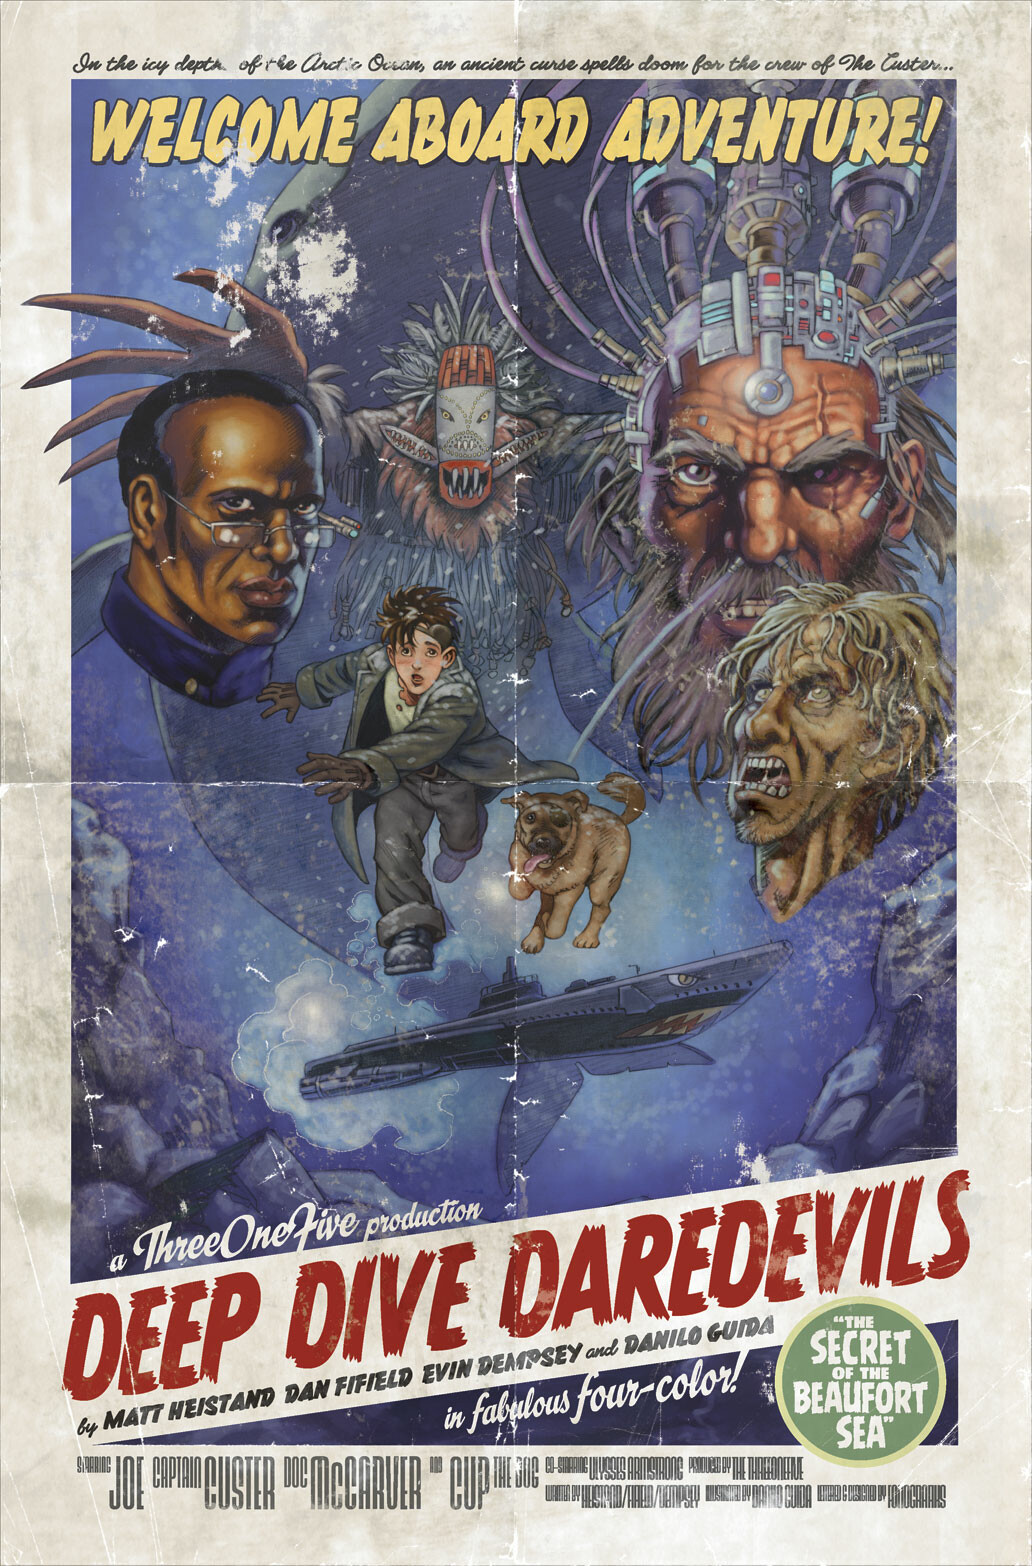 Deep Dive Daredevils
Cover